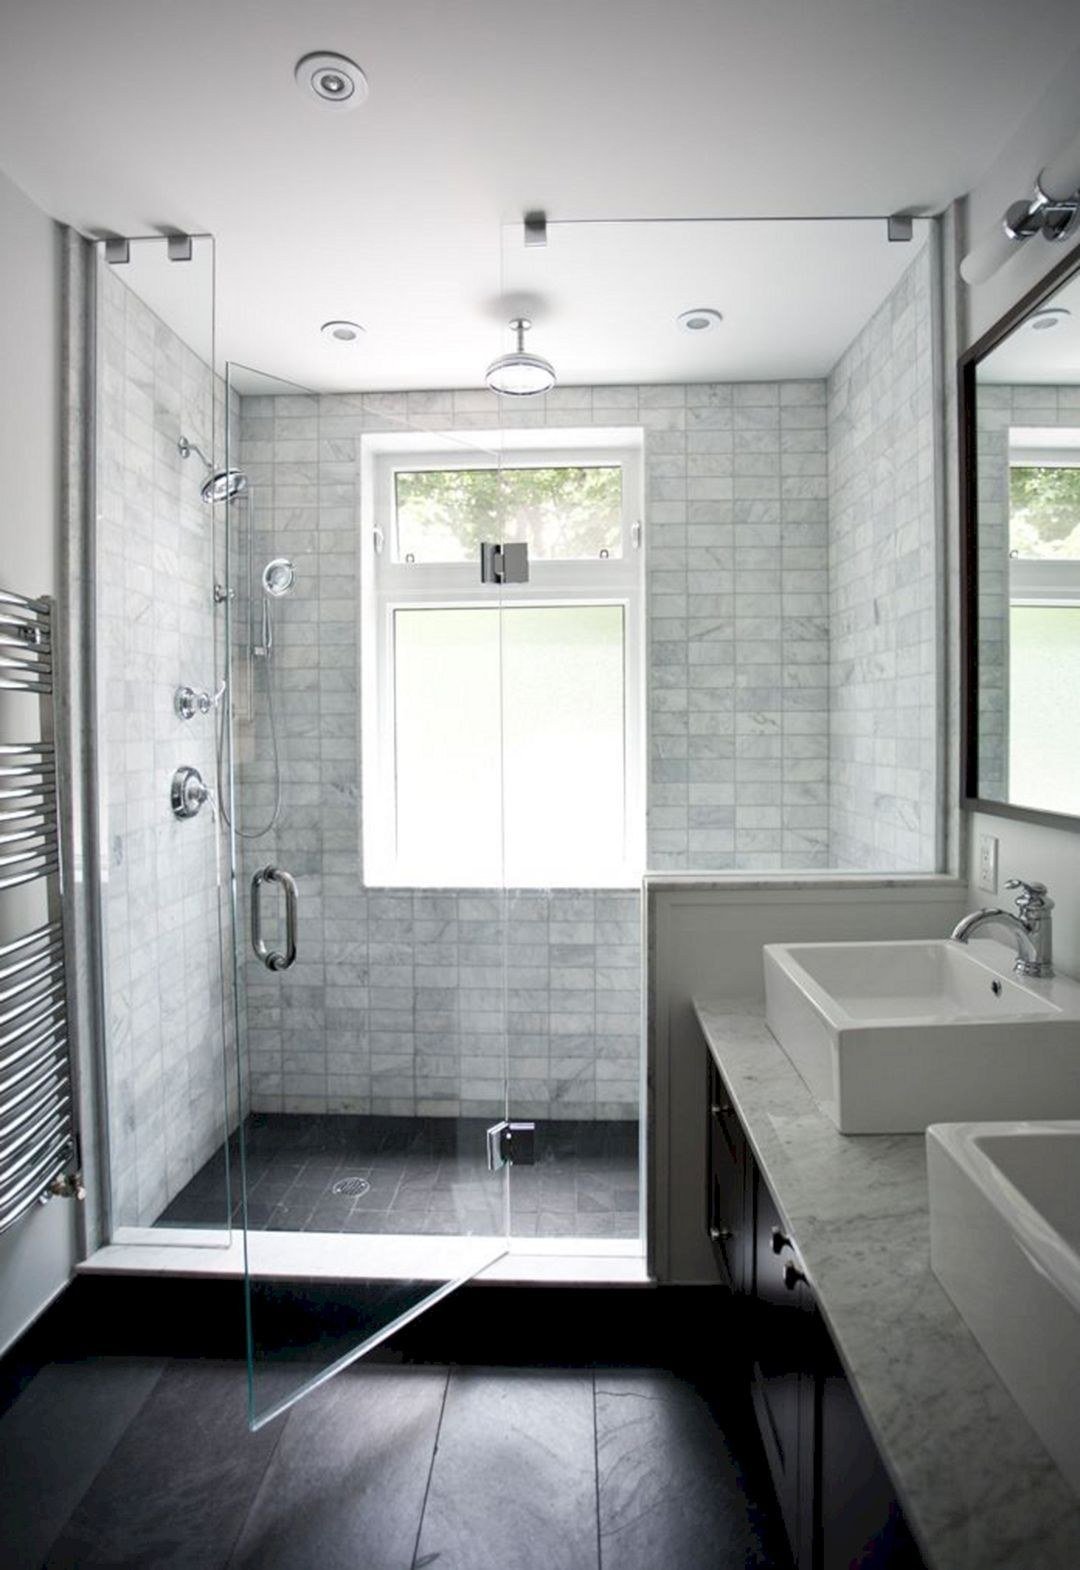 ванная комната 8м2 с окном дизайн